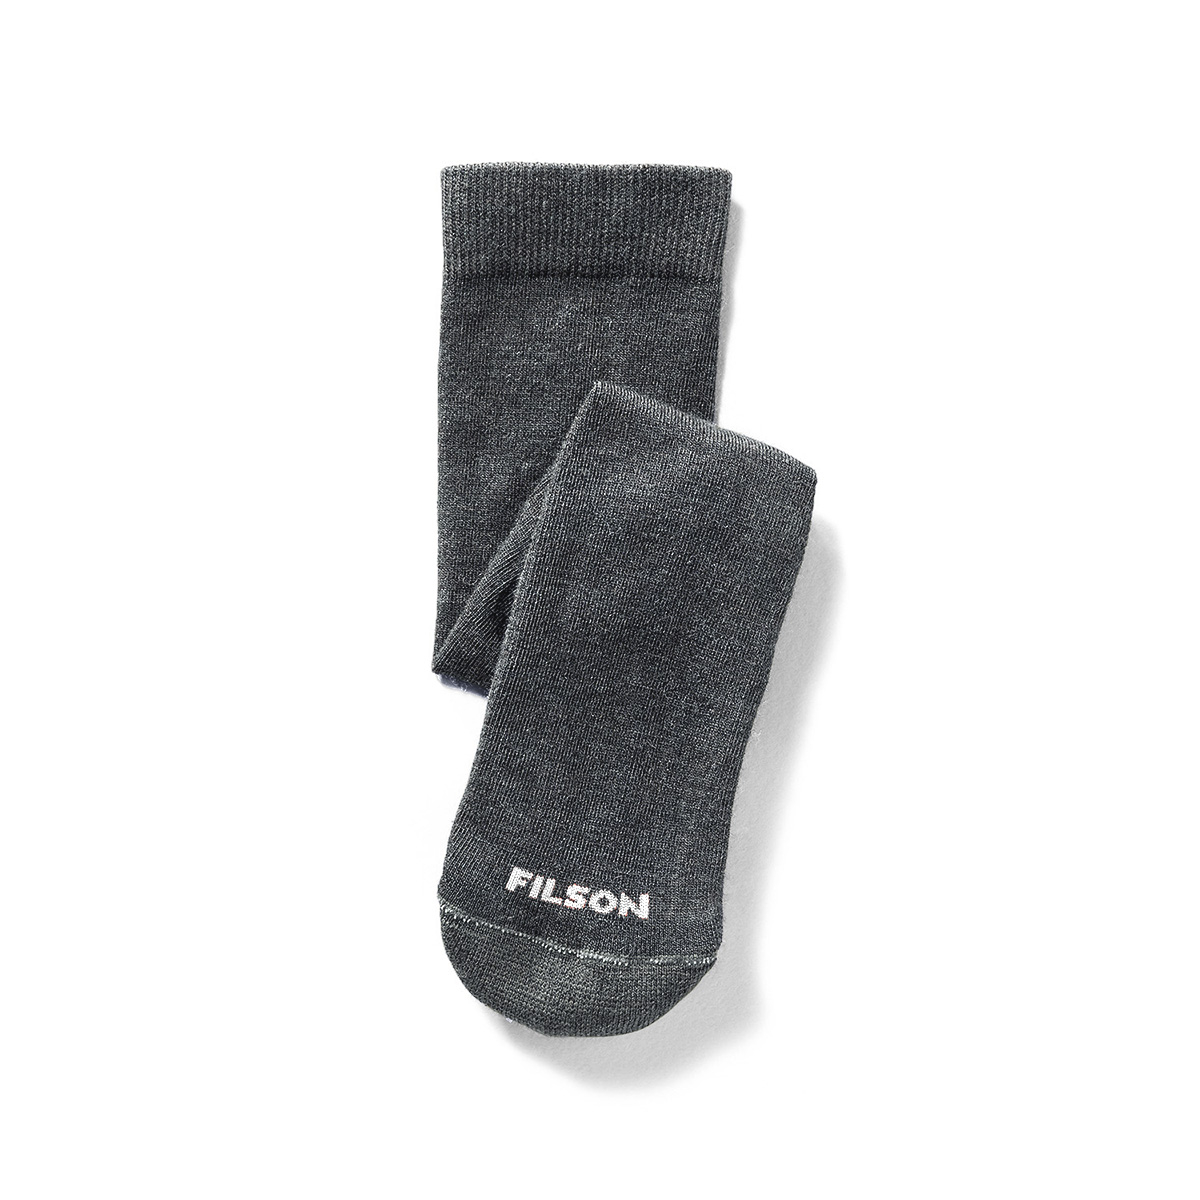 Filson Everyday Crew Sock Charcoal. Versatile, midweight socks made of a merino wool blend